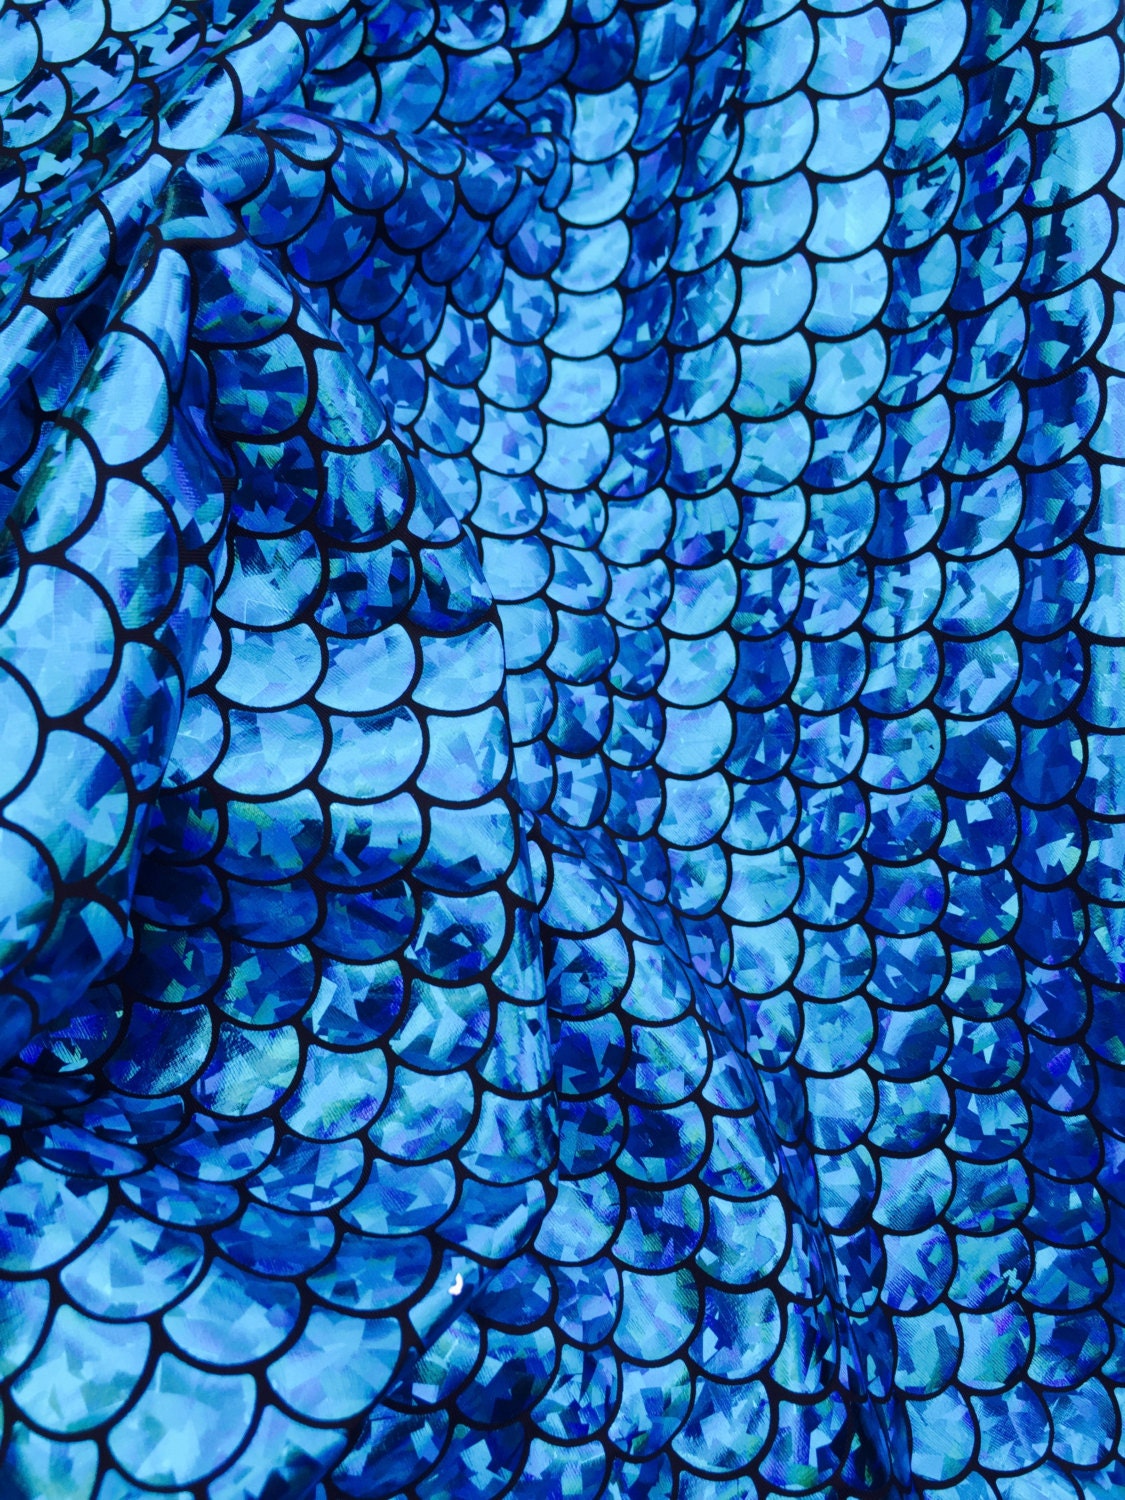 Mermaid Scales Fabric, Mermaid Fabric, Custom Print Fabric by the Yard MER3  